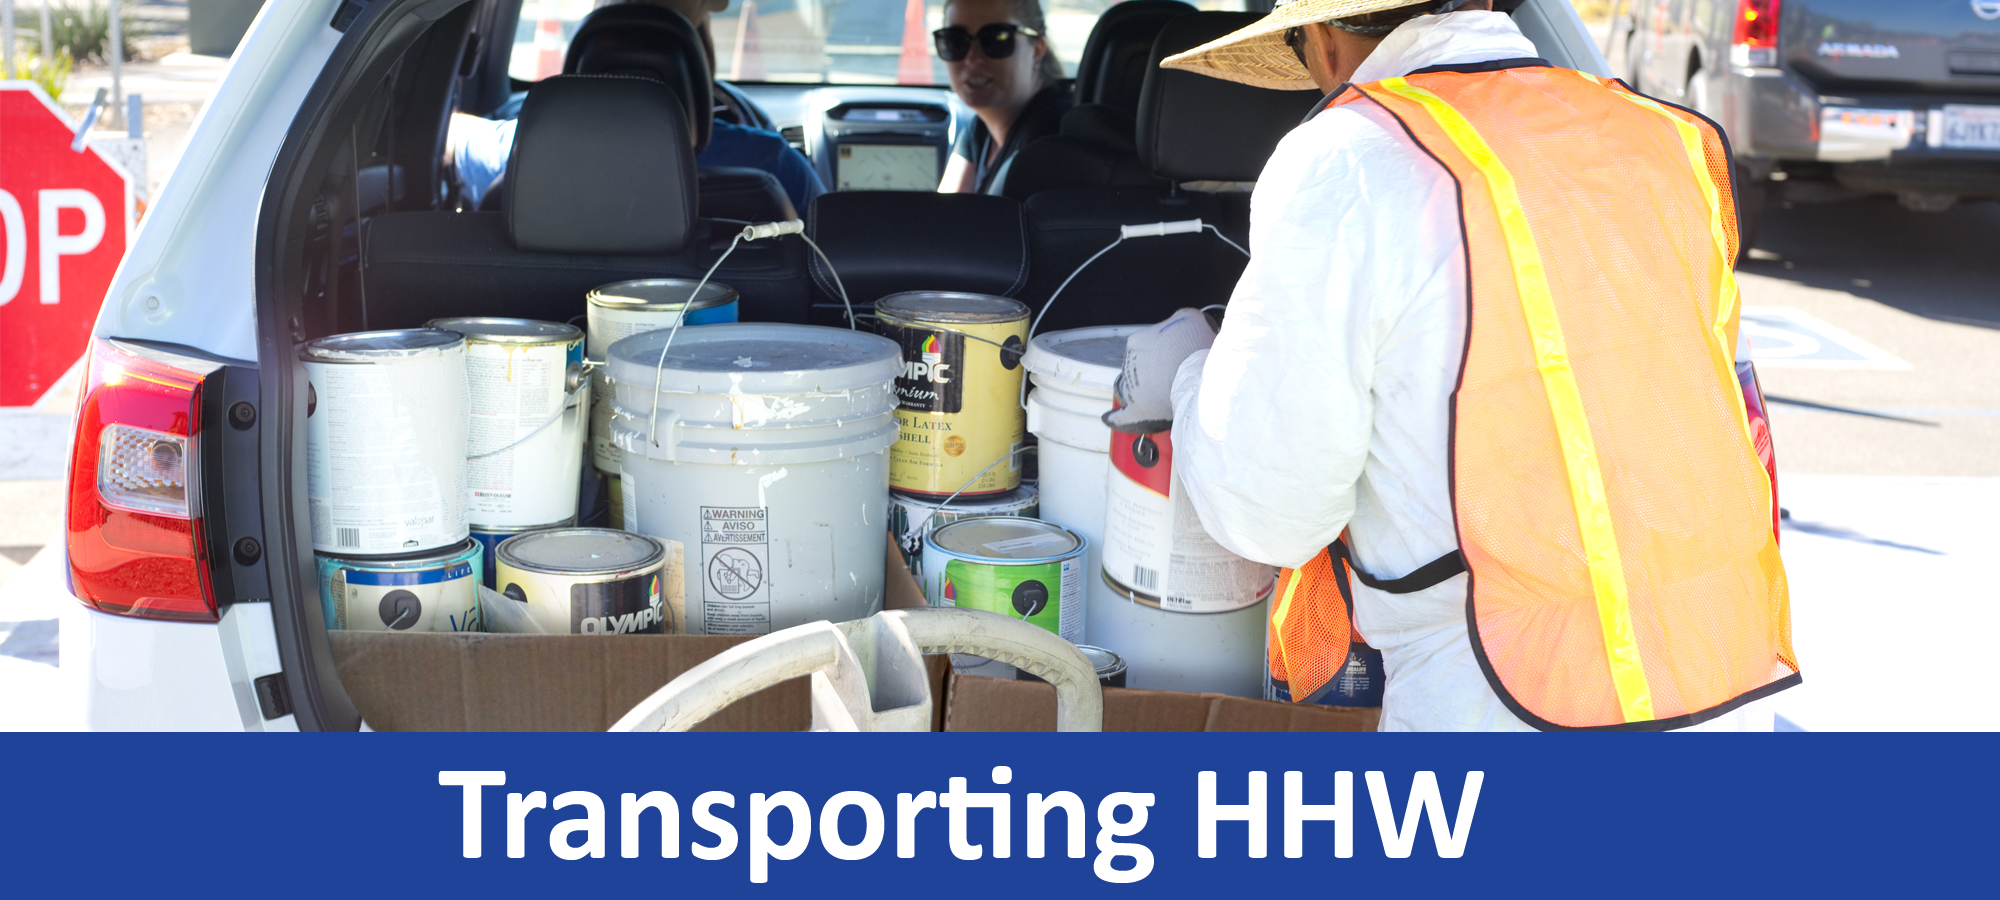 Transporting HHW